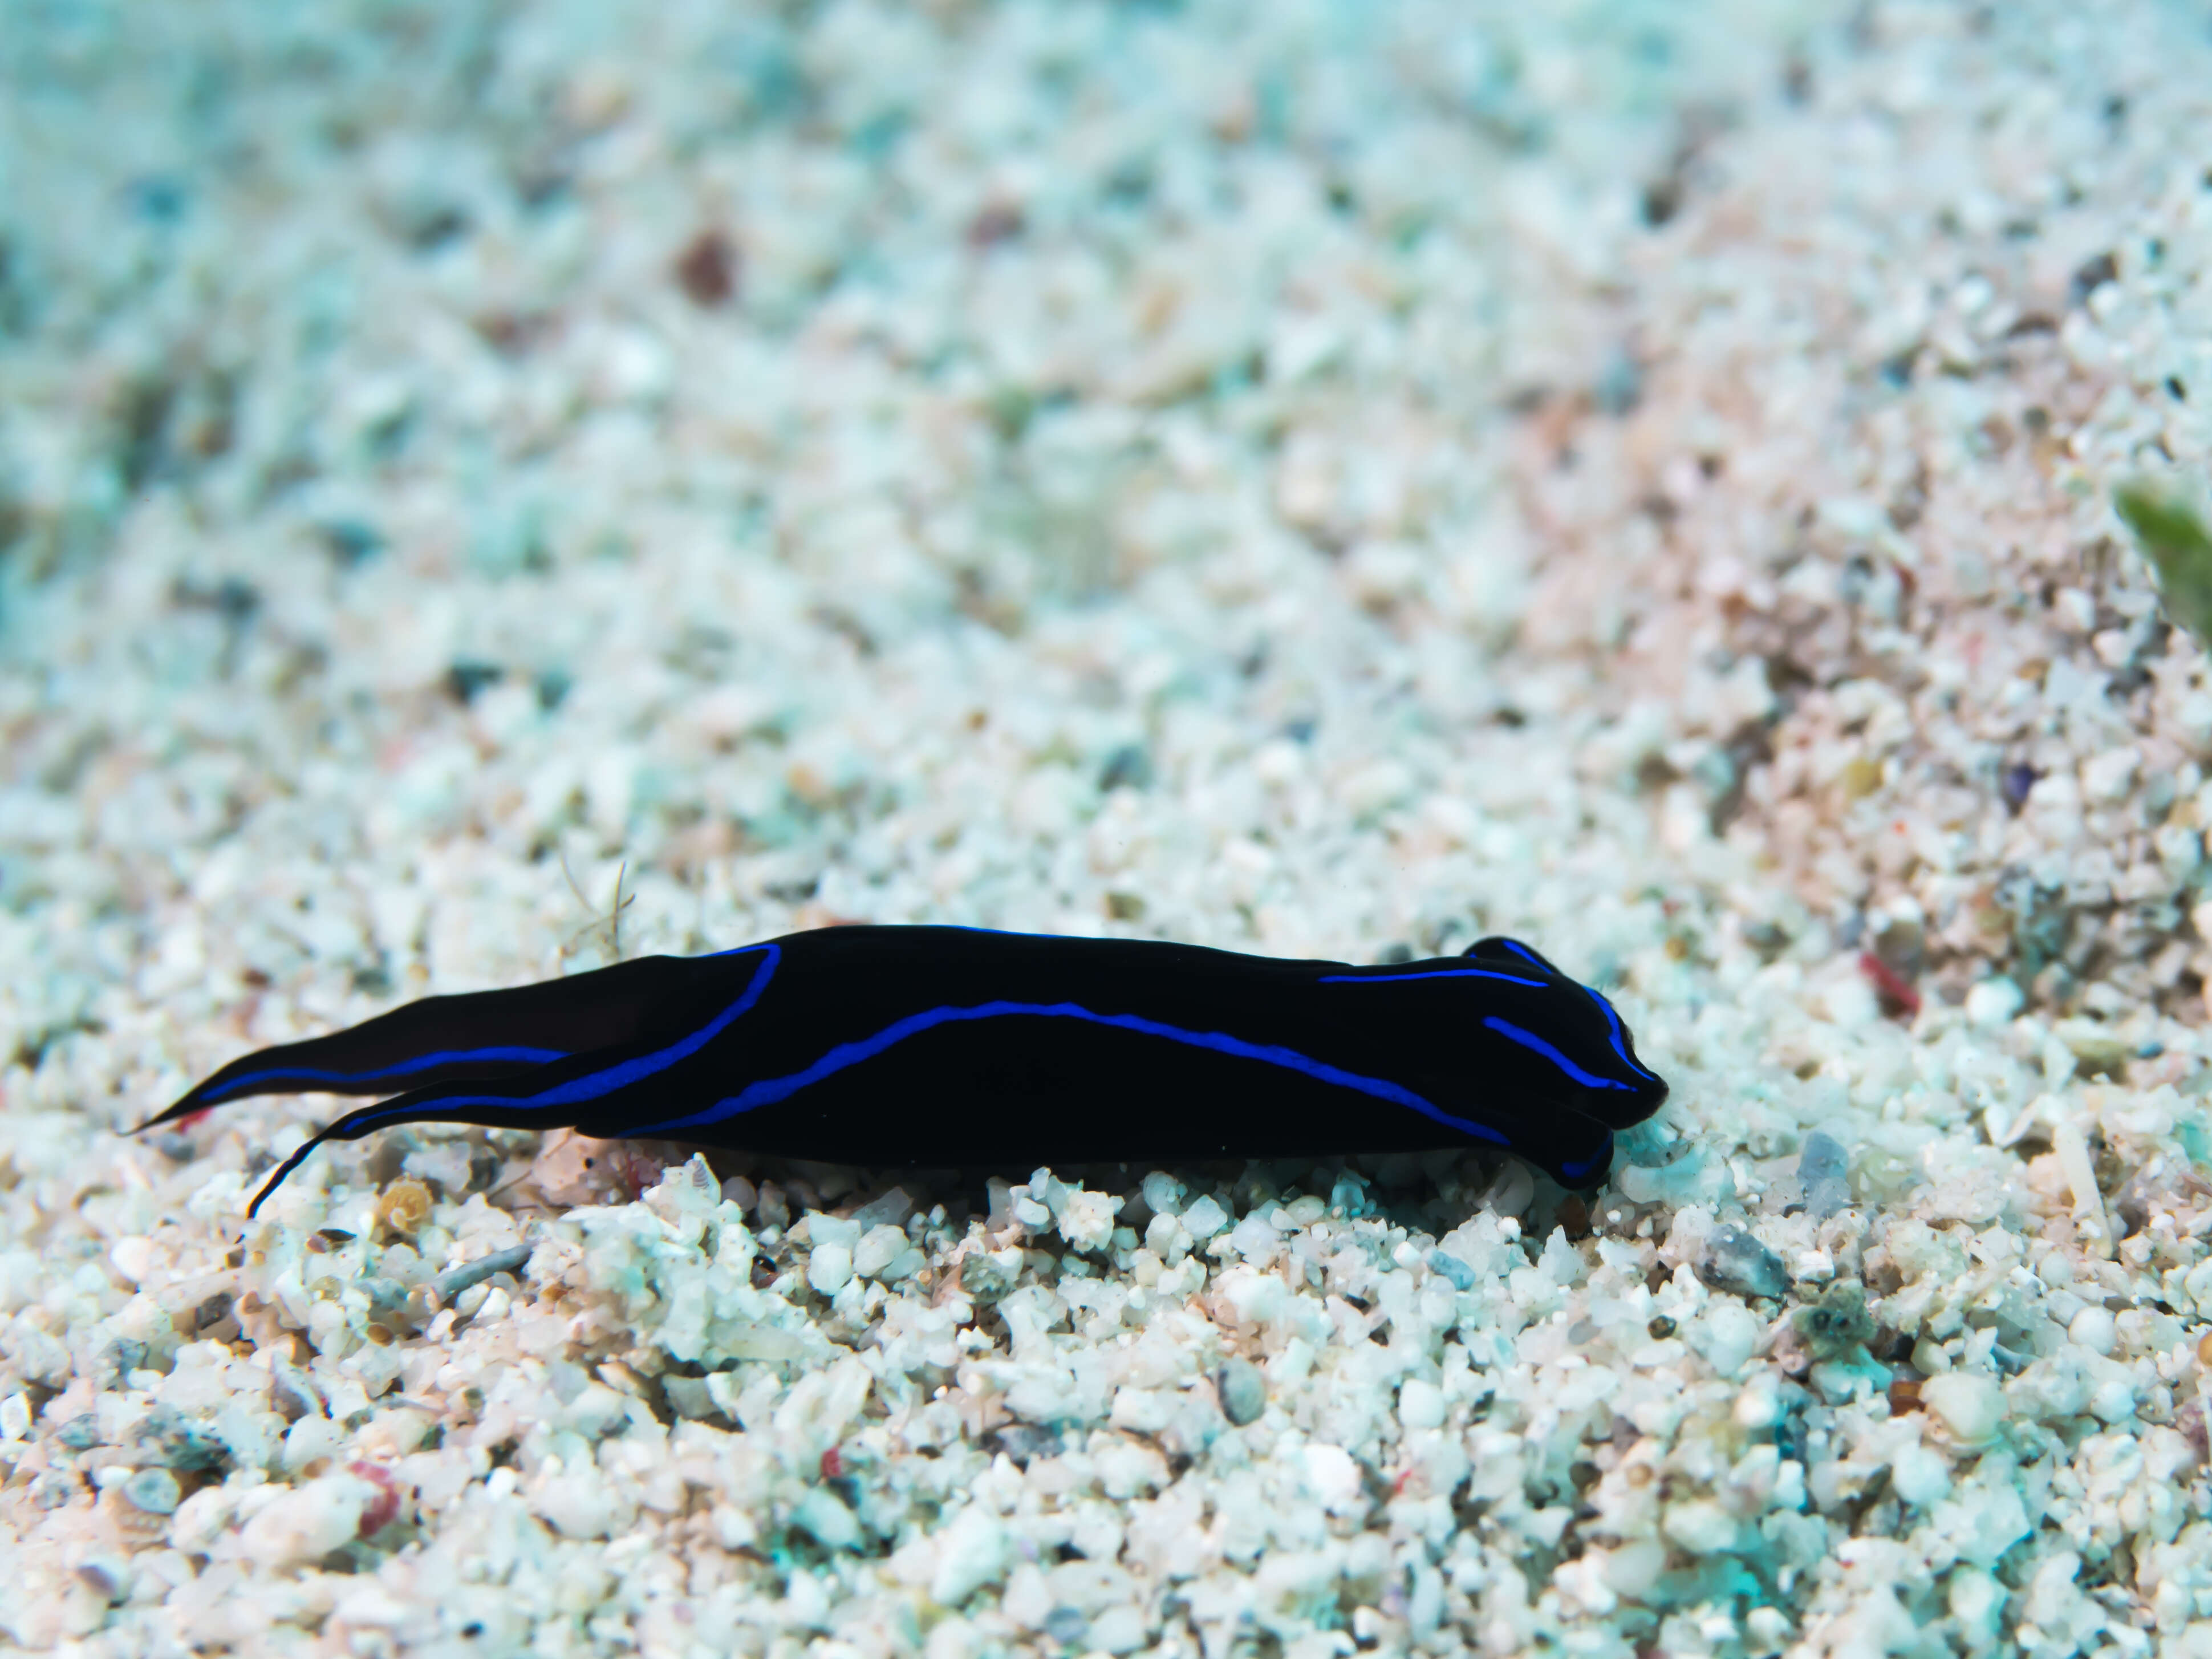 Image of Black and blue swallowtail slug